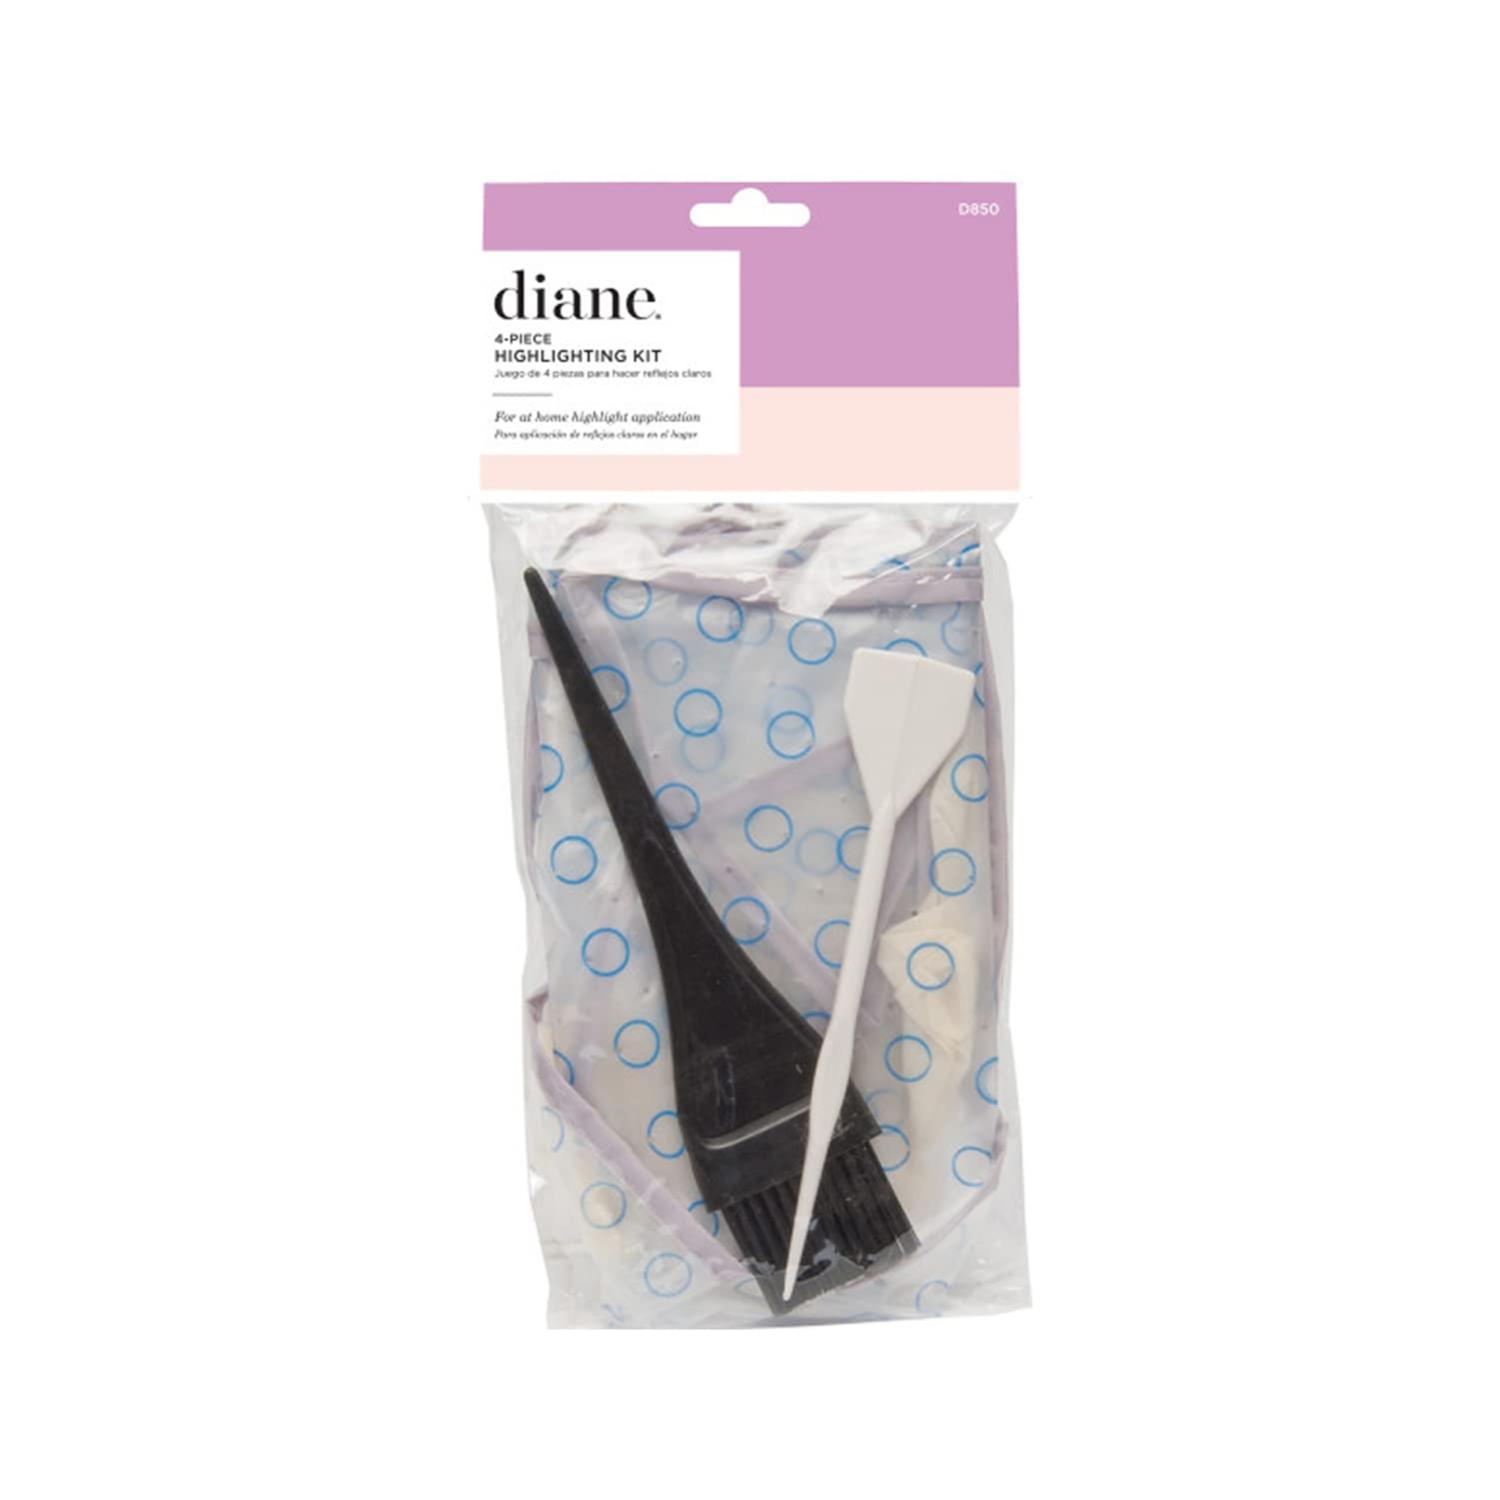 Diane Hair Coloring Kit 4 Piece Set DIY Color, Dye, Highlighting Supplies,  Gloves, Tipping Cap, Spatula